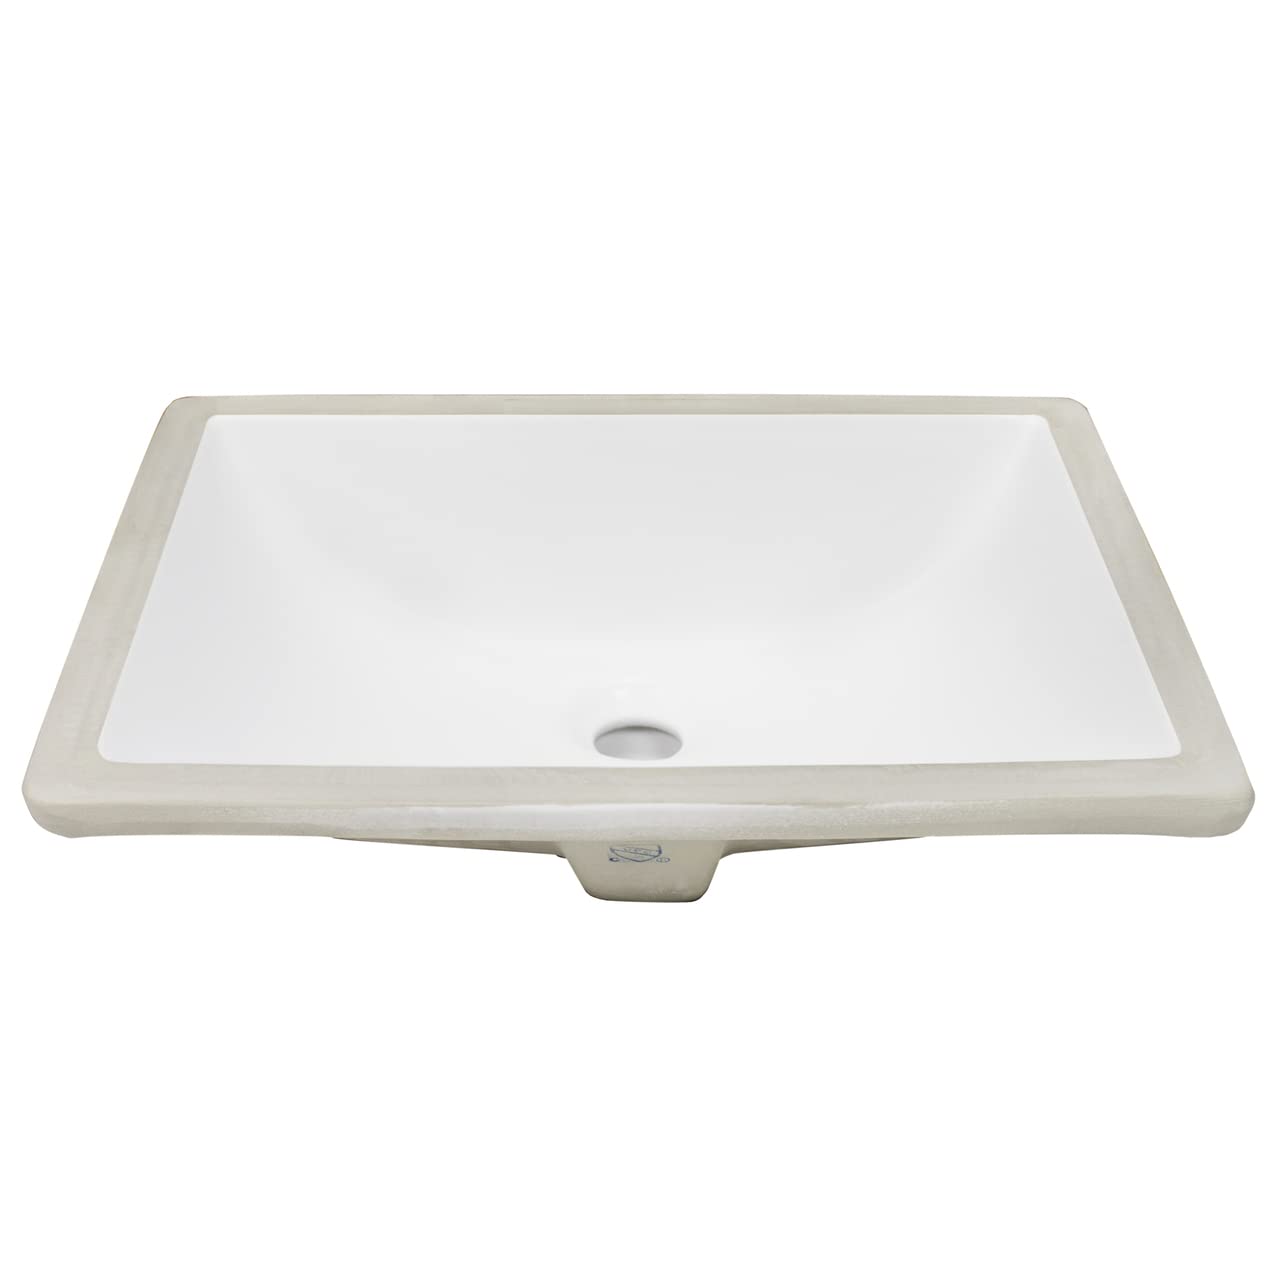 Ticor 18" Square White Porcelain Undermount Bathroom Vanity Sink Ceramic (2 Pack)